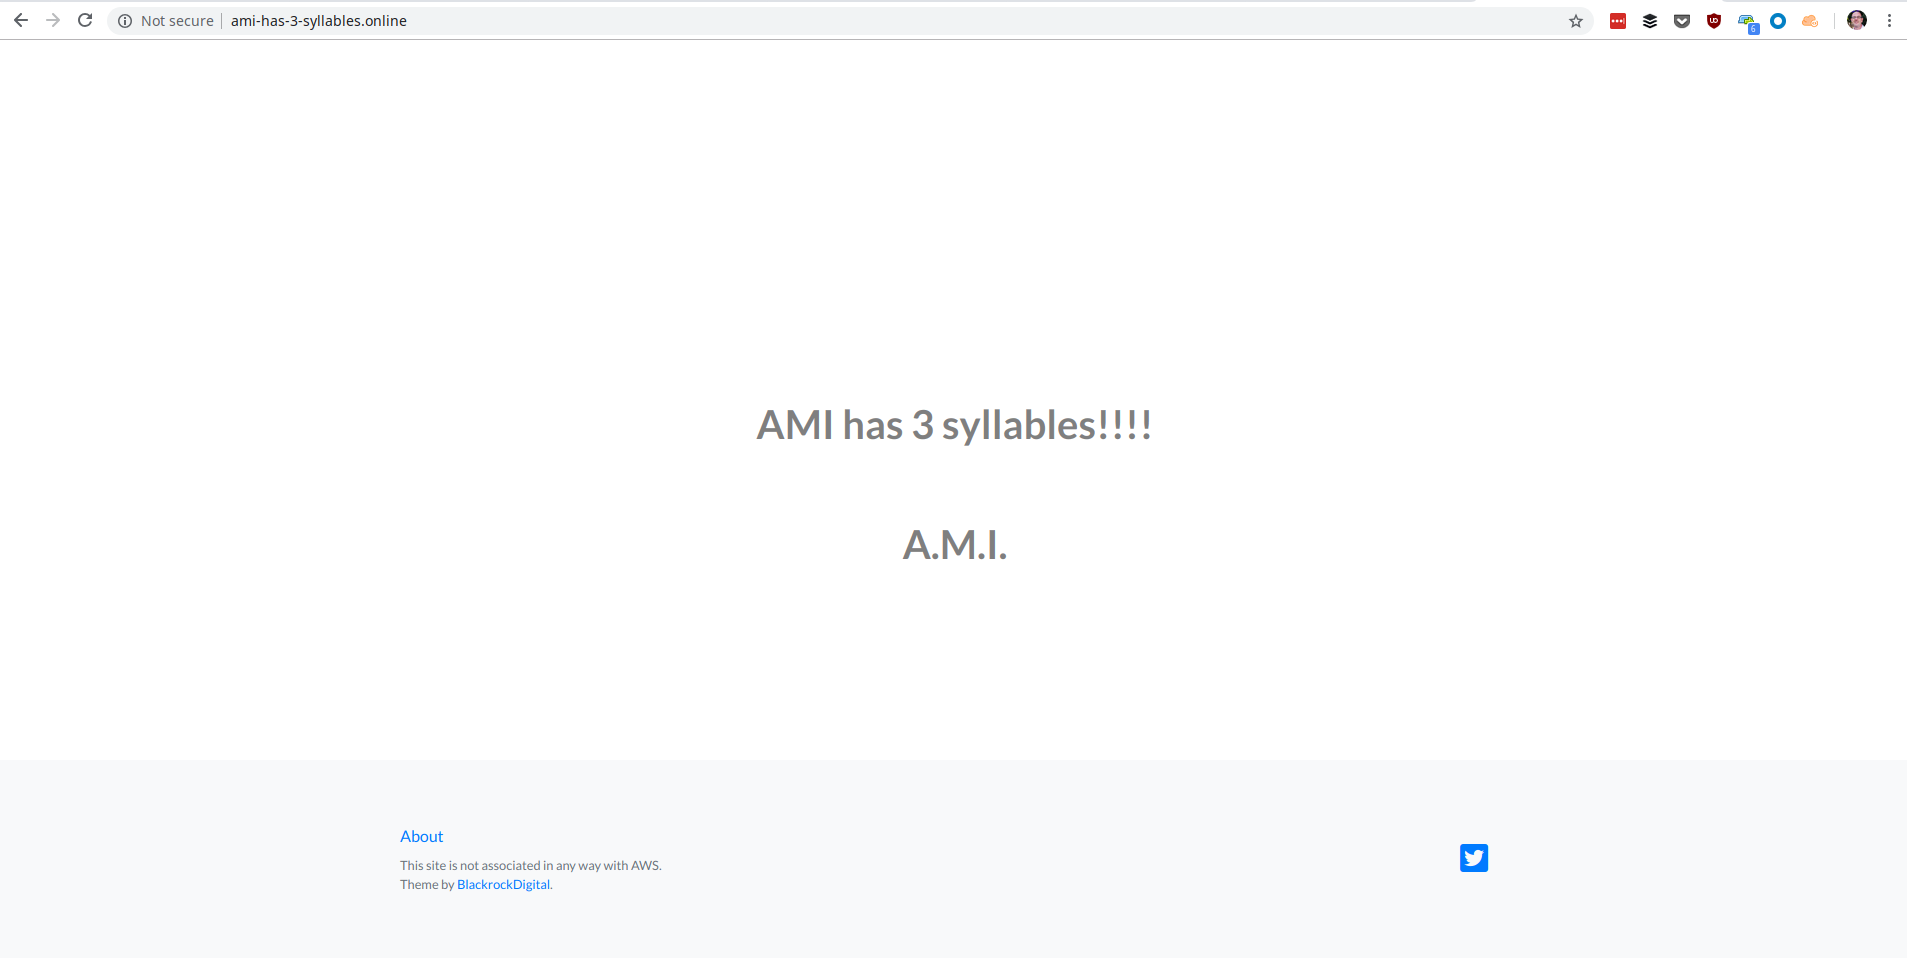 AMI has 3 syllables